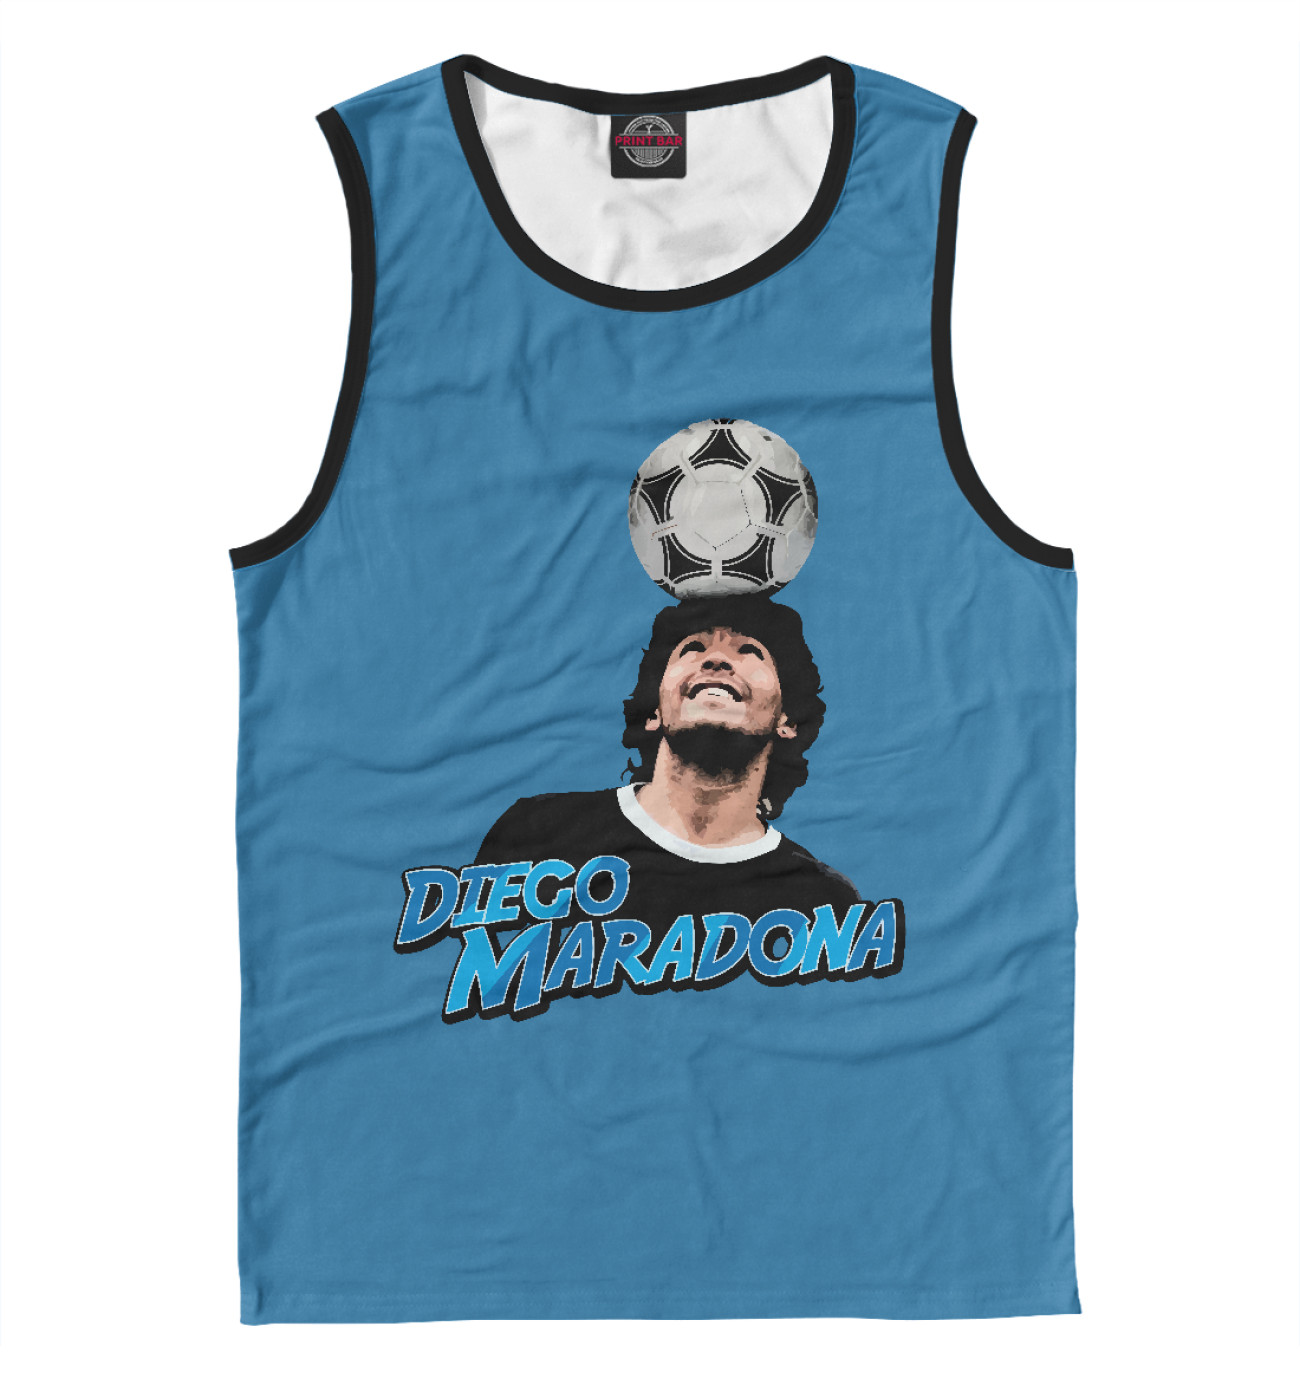 Мужская Майка Diego Maradona, артикул: FLT-667856-may-2